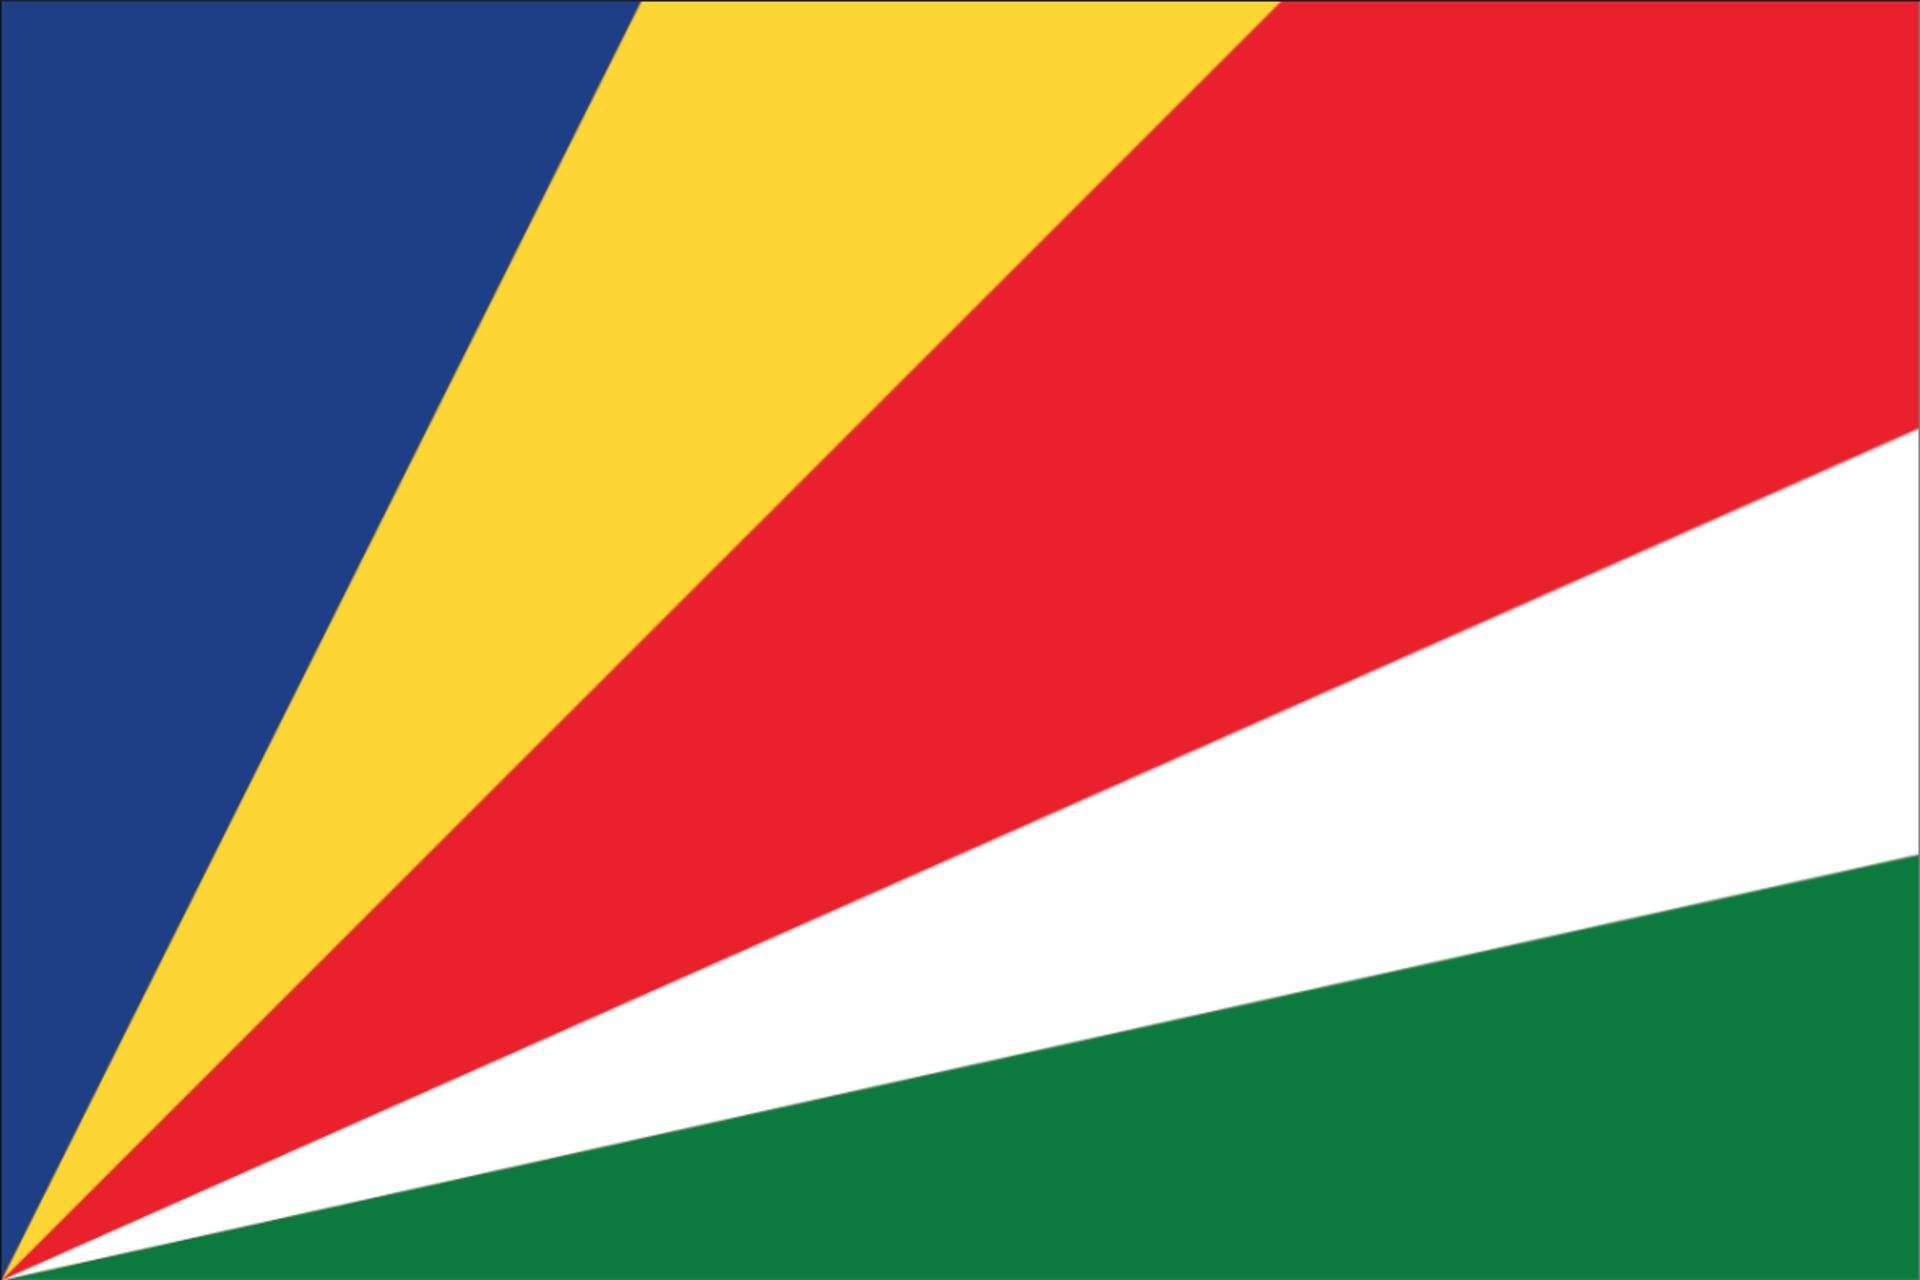 Flagge Querformat g/m² flaggenmeer 160 Seychellen